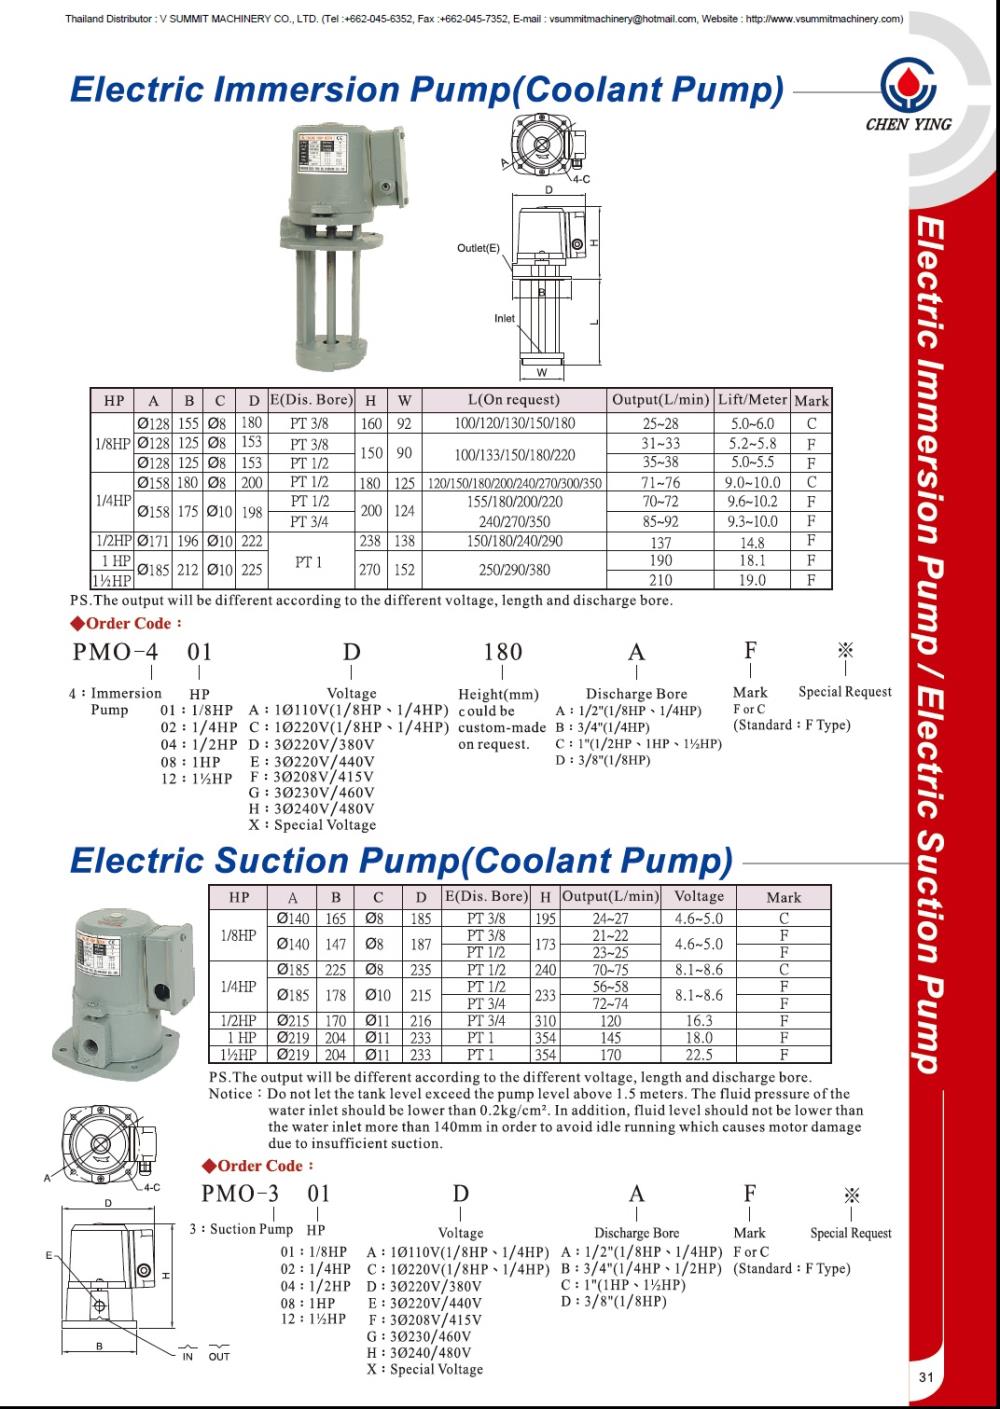 Electric Immersion Pump (Coolant Pump), คูลแลนท์ปั๊ม, คูลลิ่งปั๊ม, cooling pump, ปั๊มหล่อเย็น, ปั๊มน้ำยาหล่อเย็น, ปั๊มหล่อเย็นมีขา, ปั๊มหล่อเย็นมีก้าน, ปั๊มหล่อเย็นแบบจุ่ม, ปั๊มหล่อเย็นขาจุ่ม